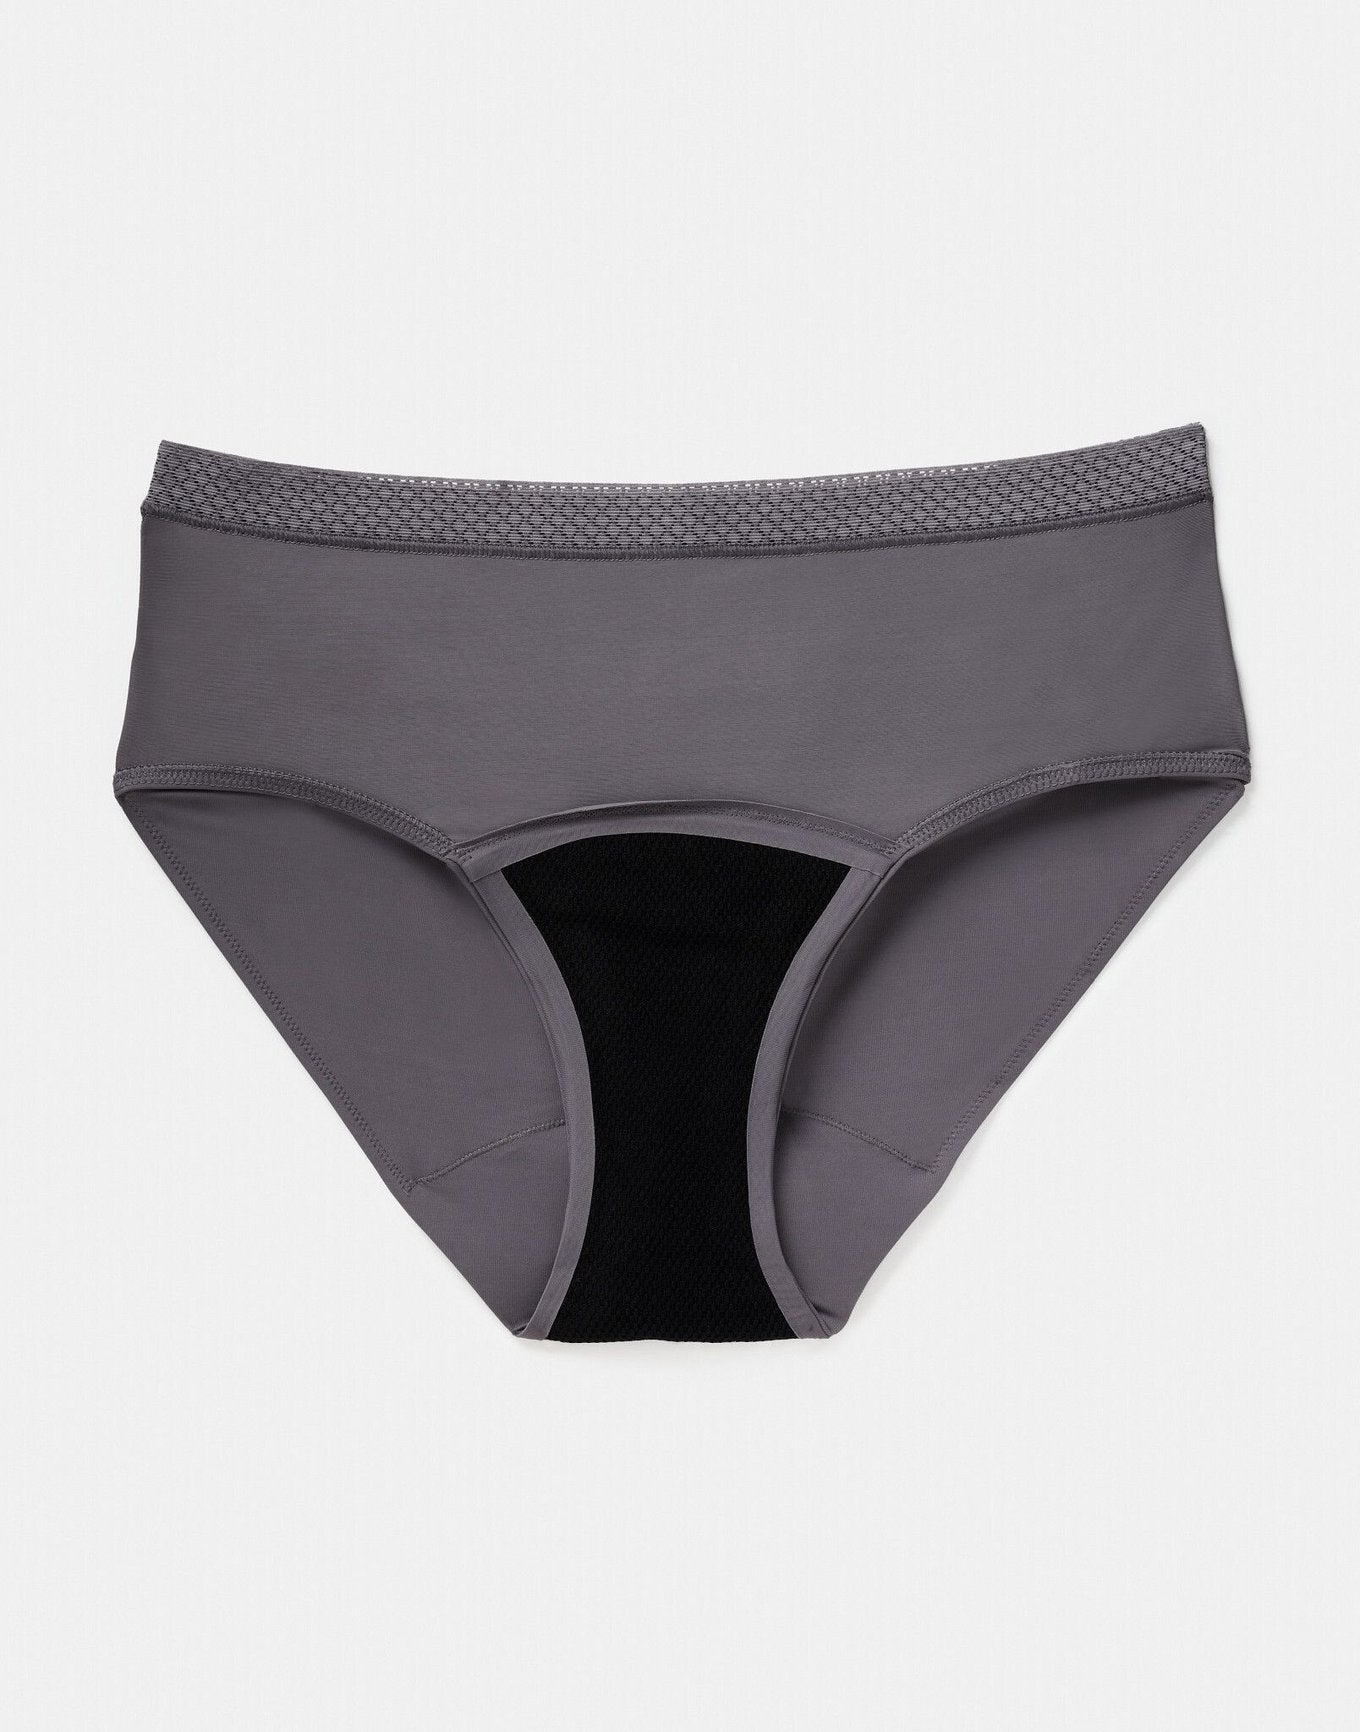 Madison period-proof panty – Joyja